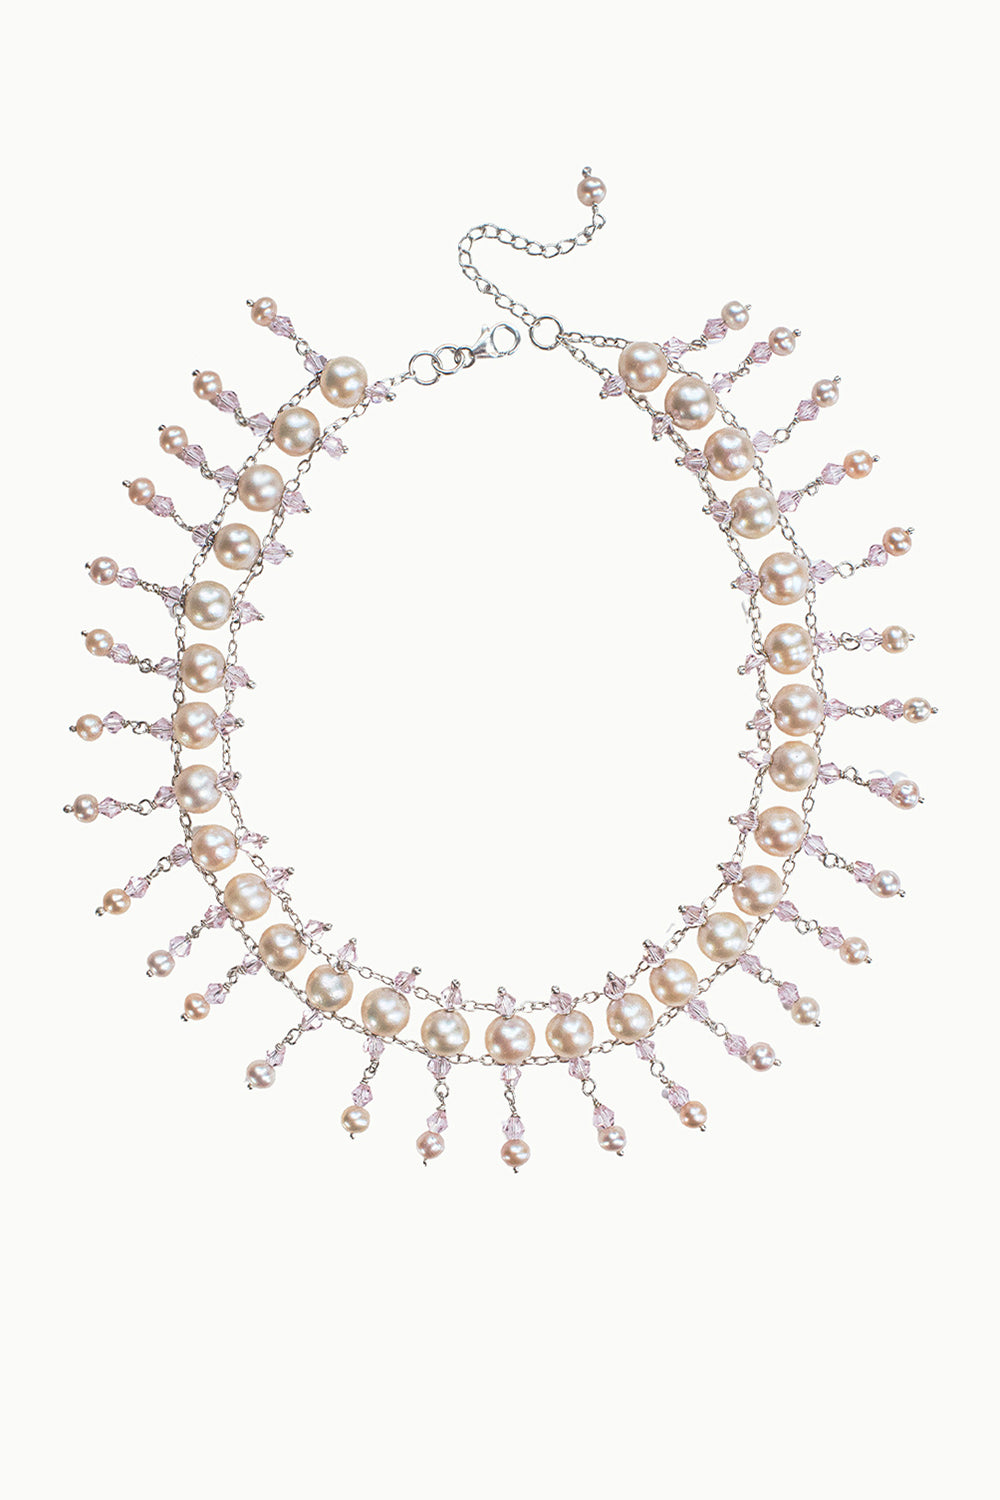 Venice Peach Pearl Choker Necklace Sterling Silver